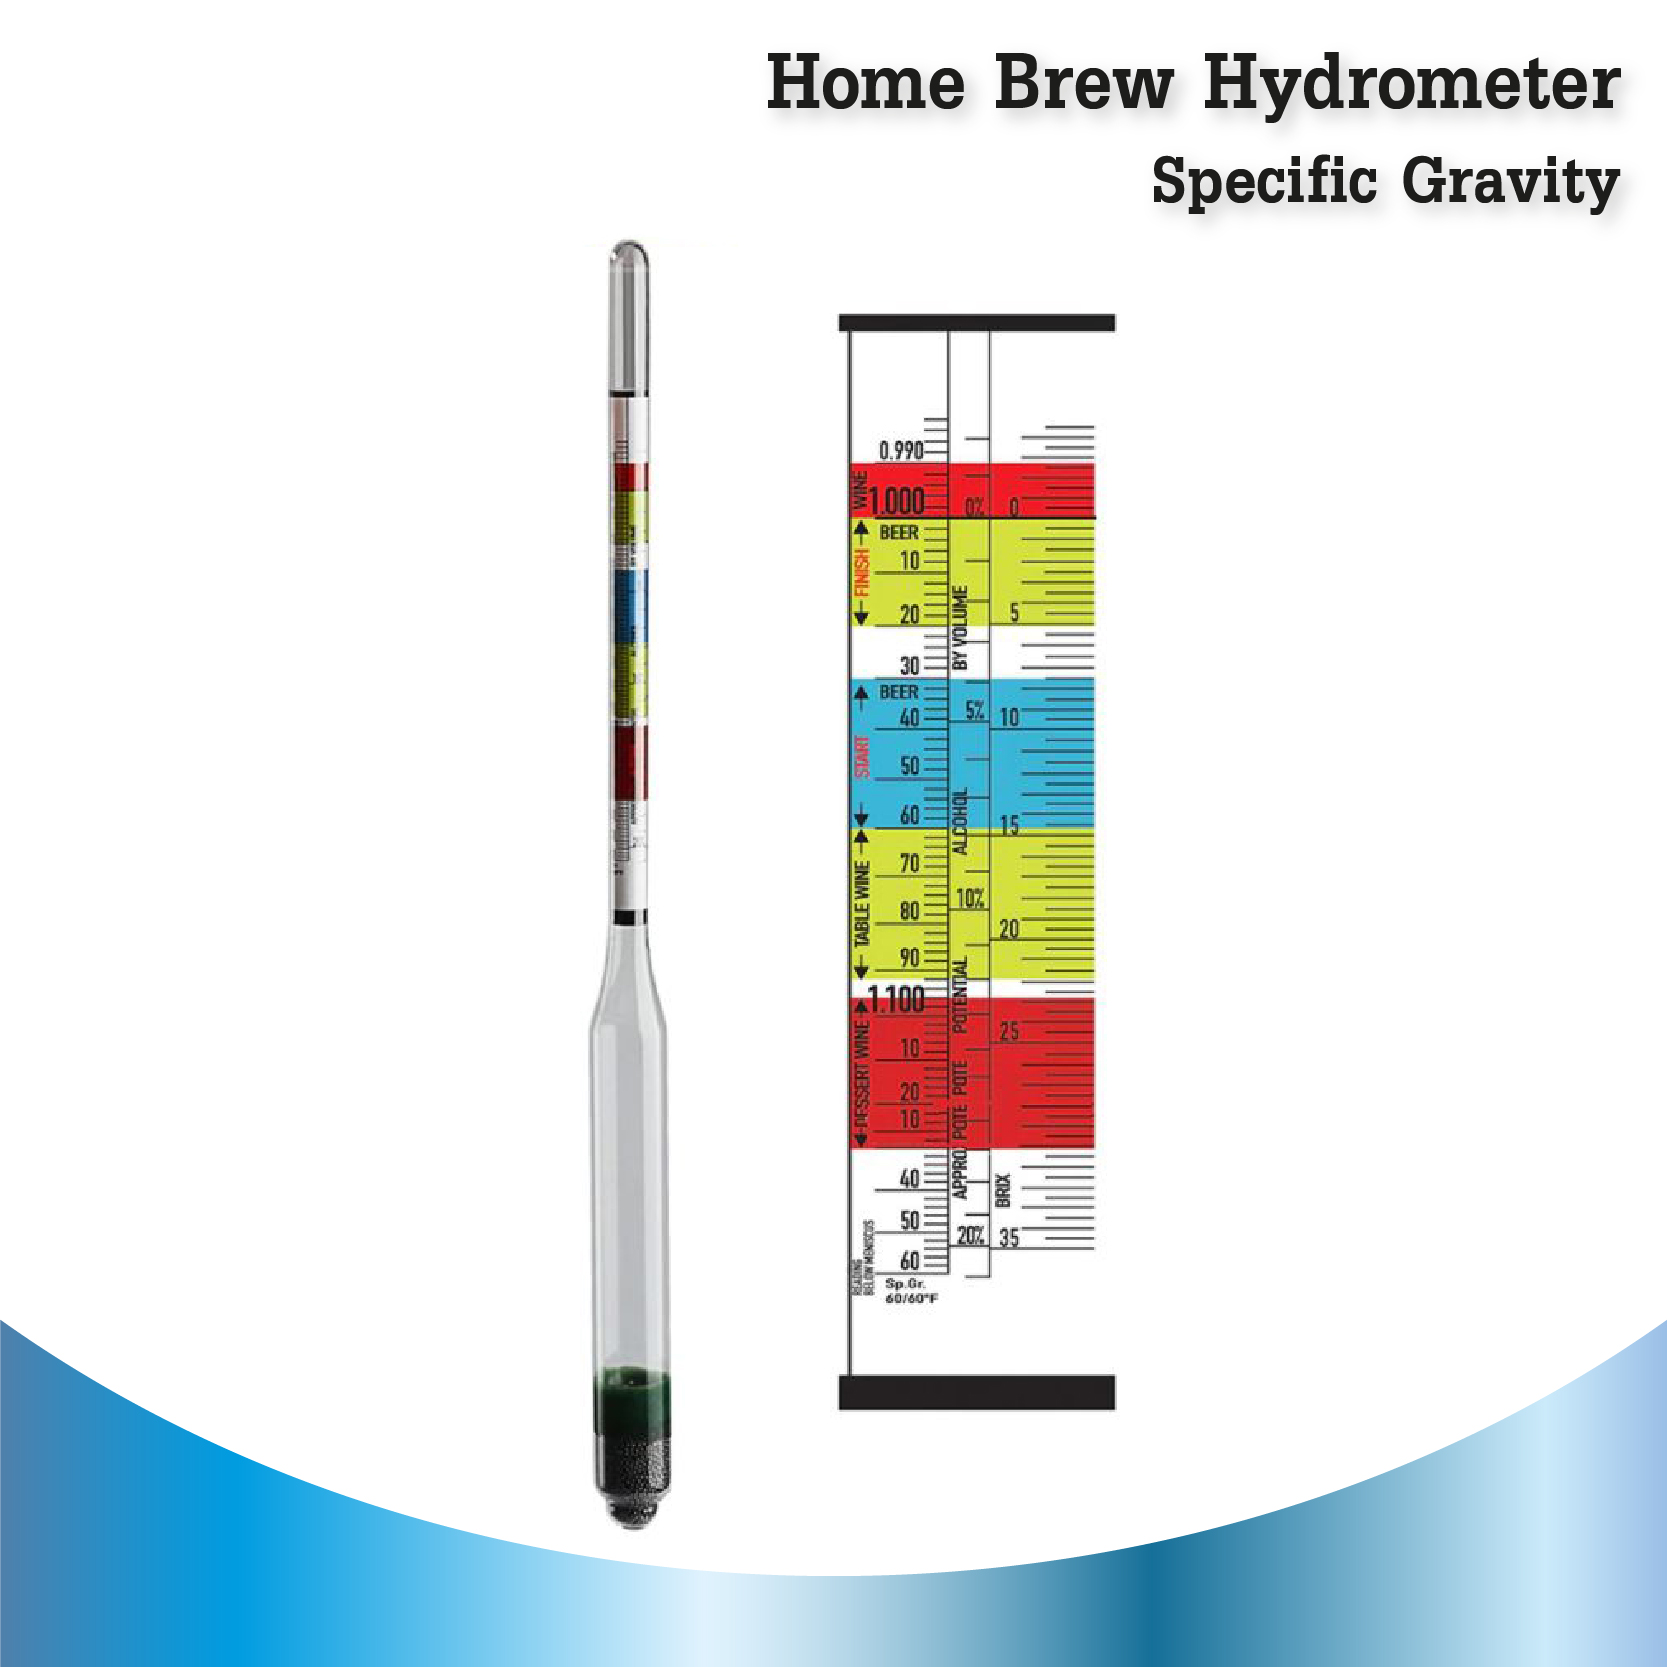 Home Brew Hydrometer - Specific Gravity